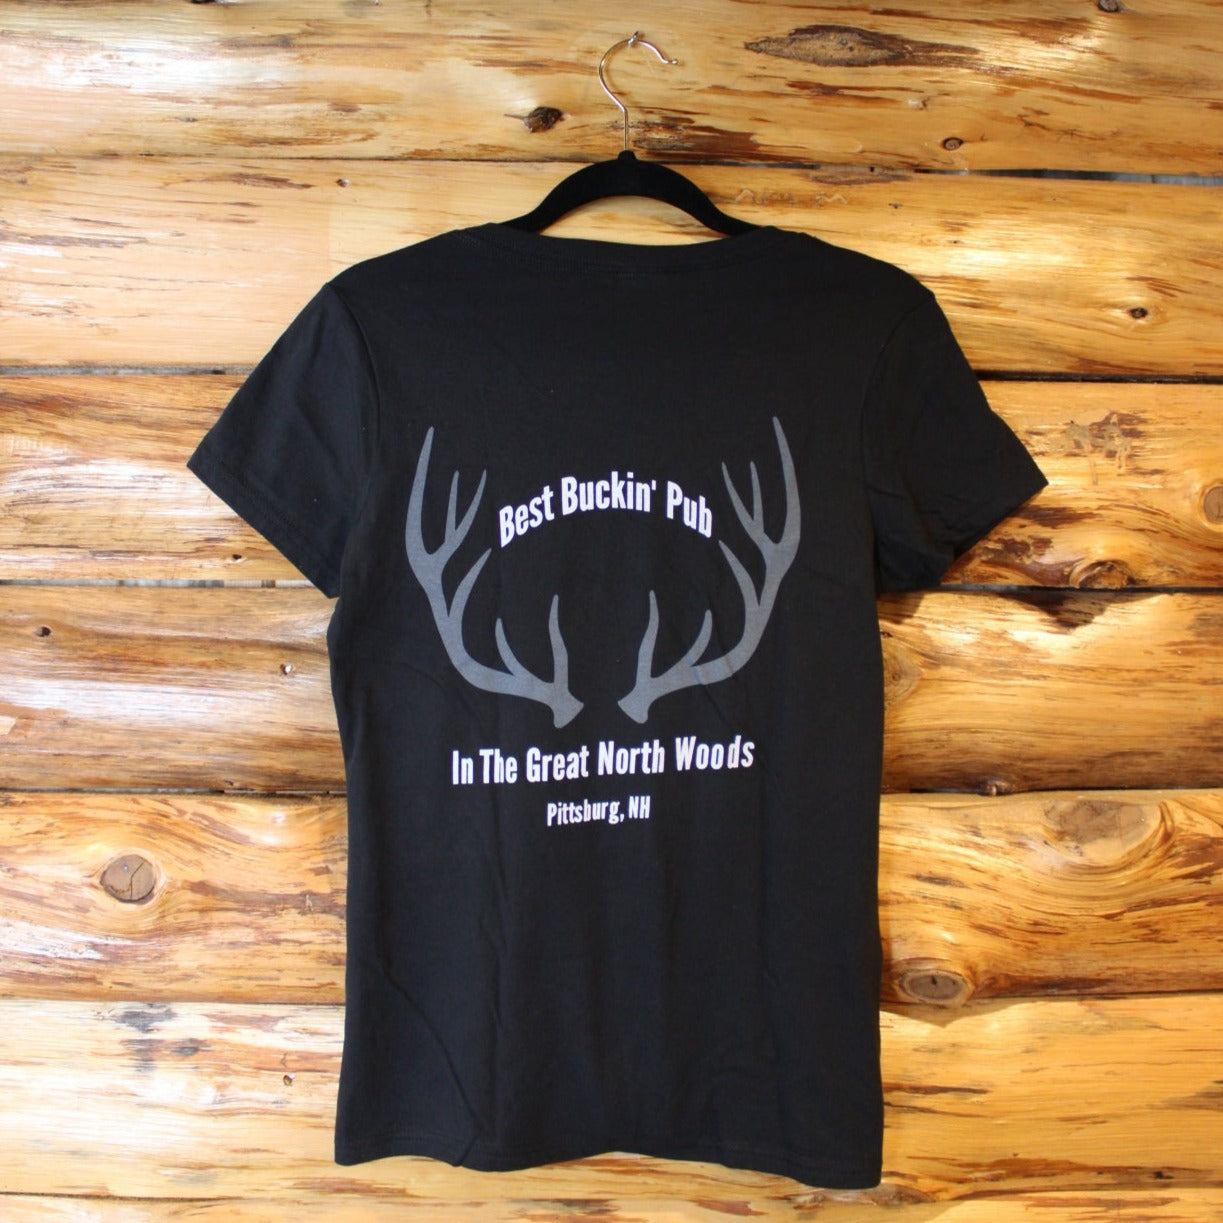 Best Buckin’ Pub Women’s Black V Neck T-Shirt